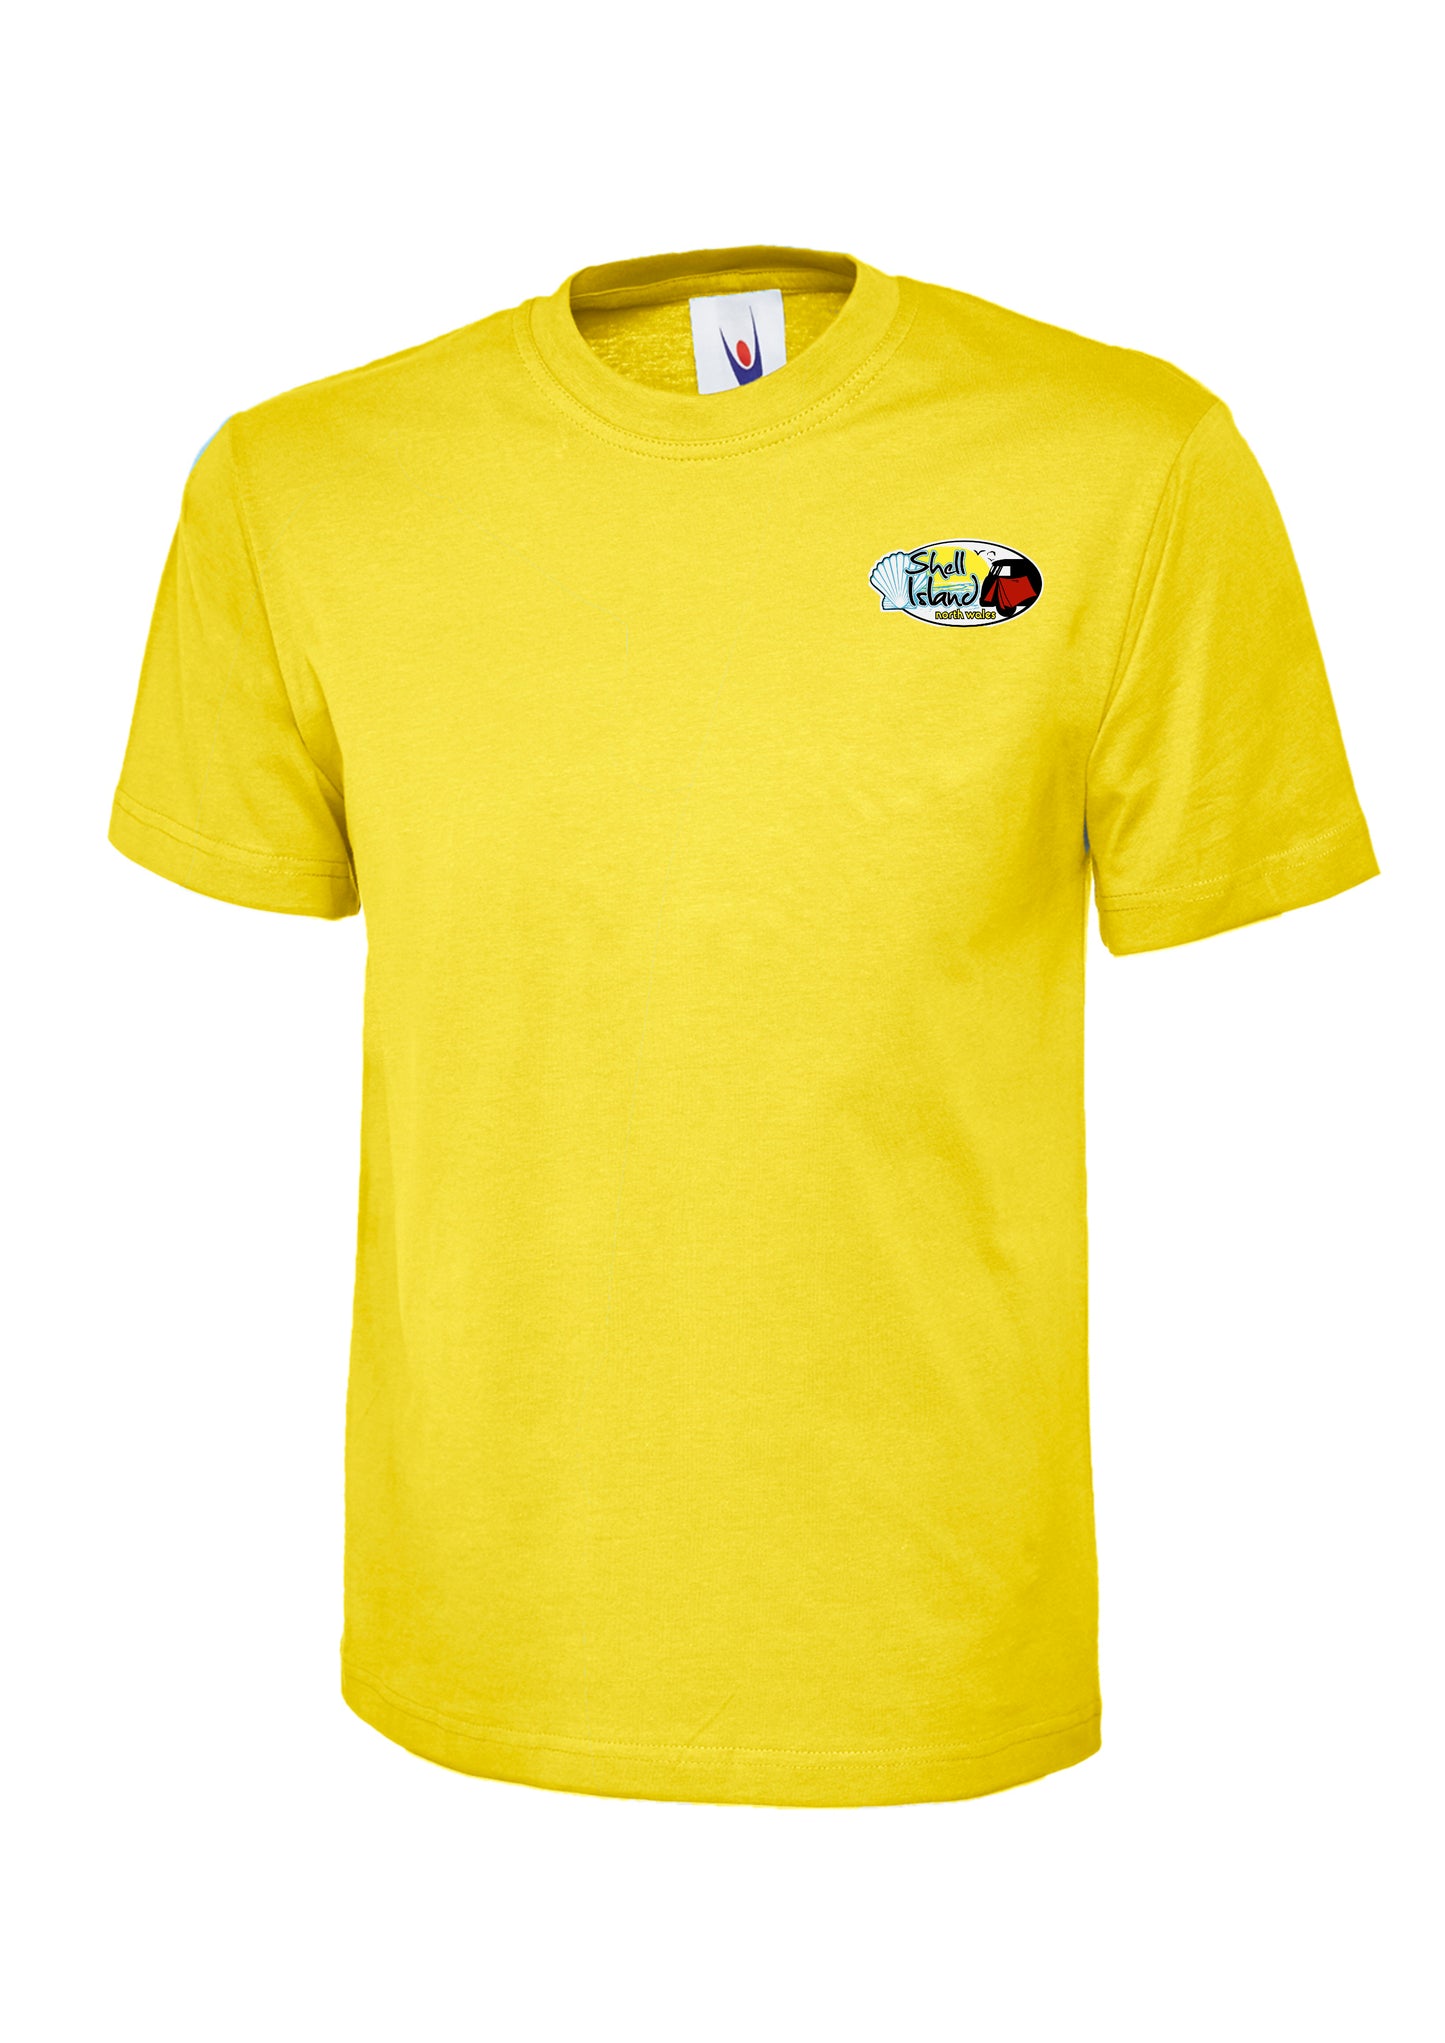 Adults Short sleeved Shell Island logo t-shirt